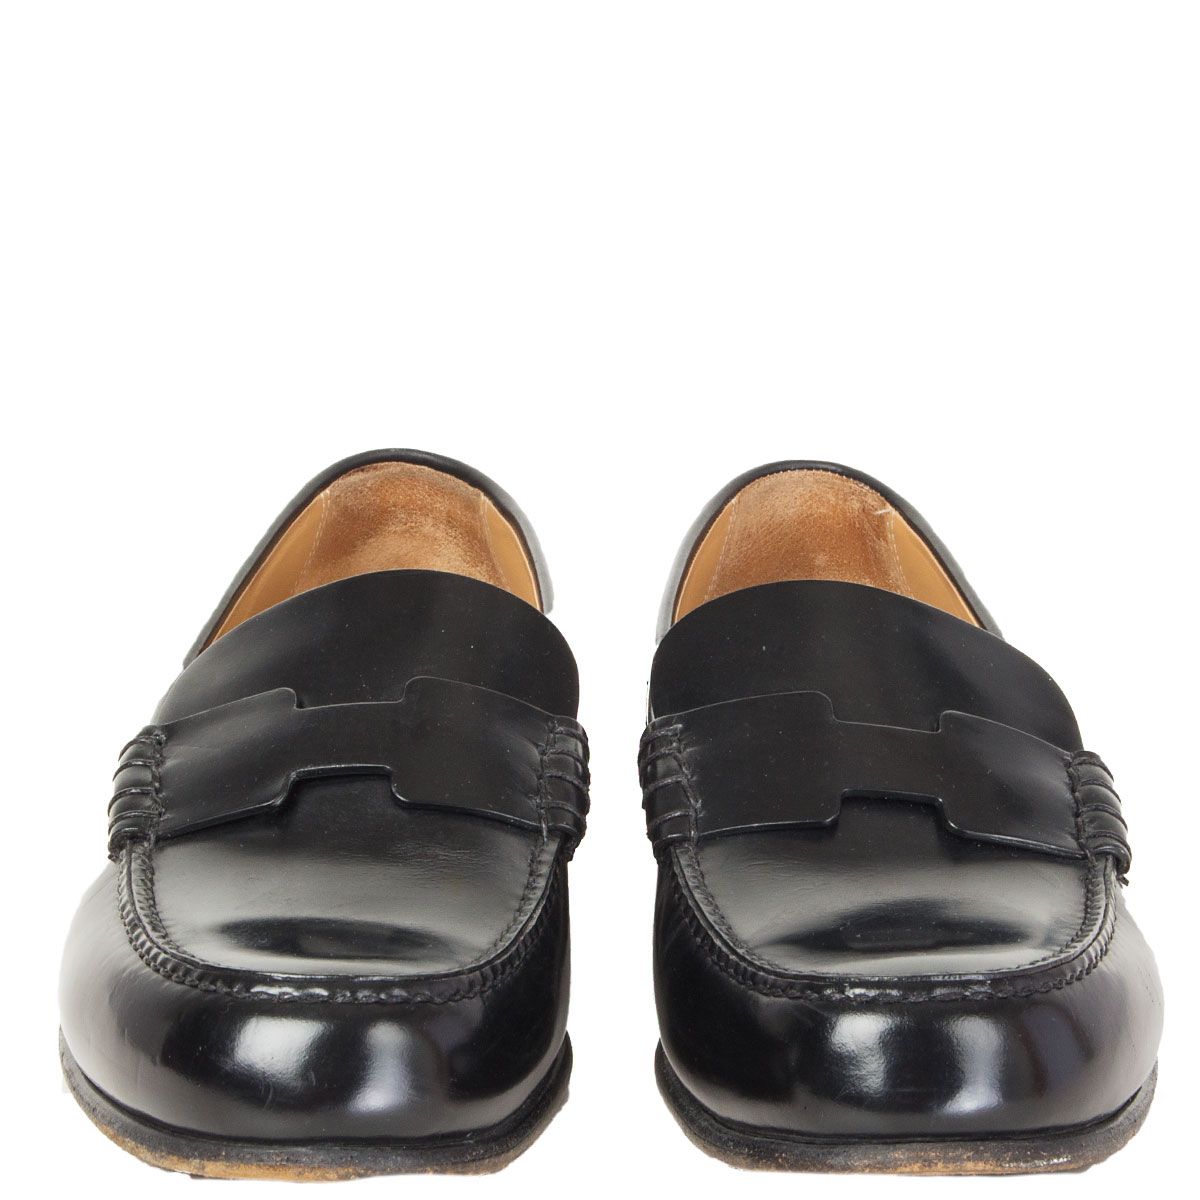 Hermès 'Kennedy' Loafers Black Leather